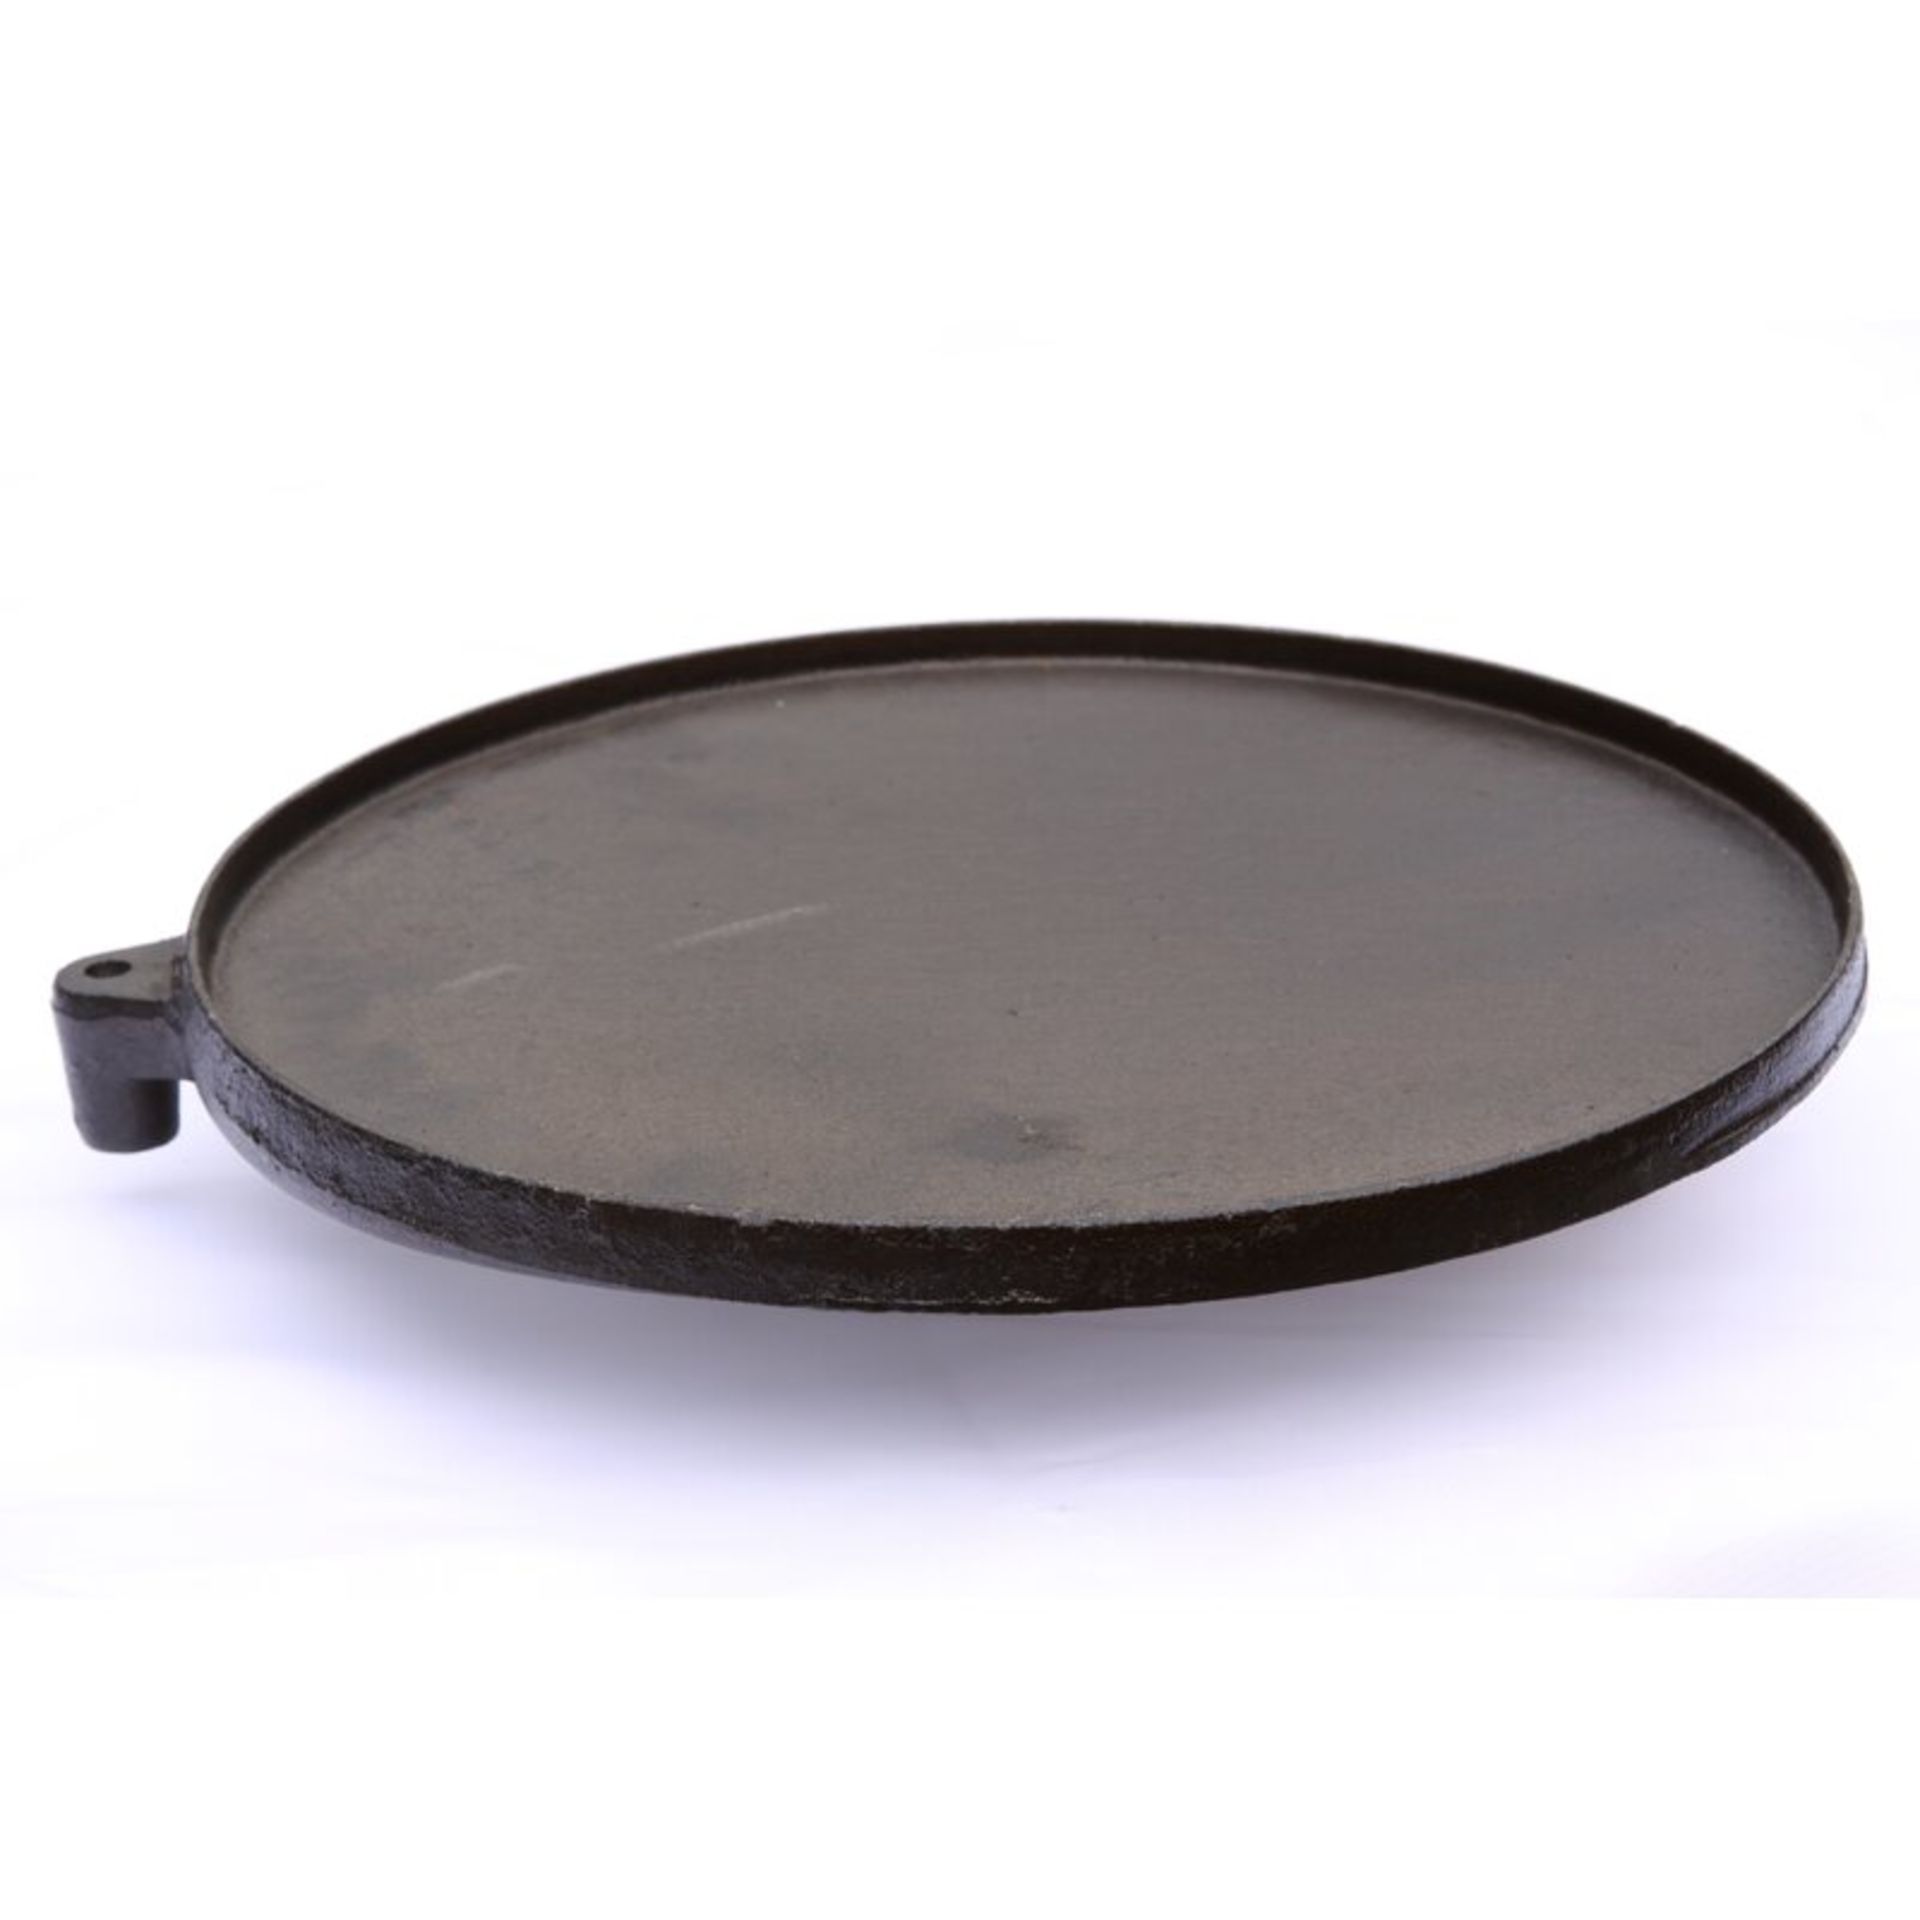 30cm Black Grill Pan - RRP £17.99